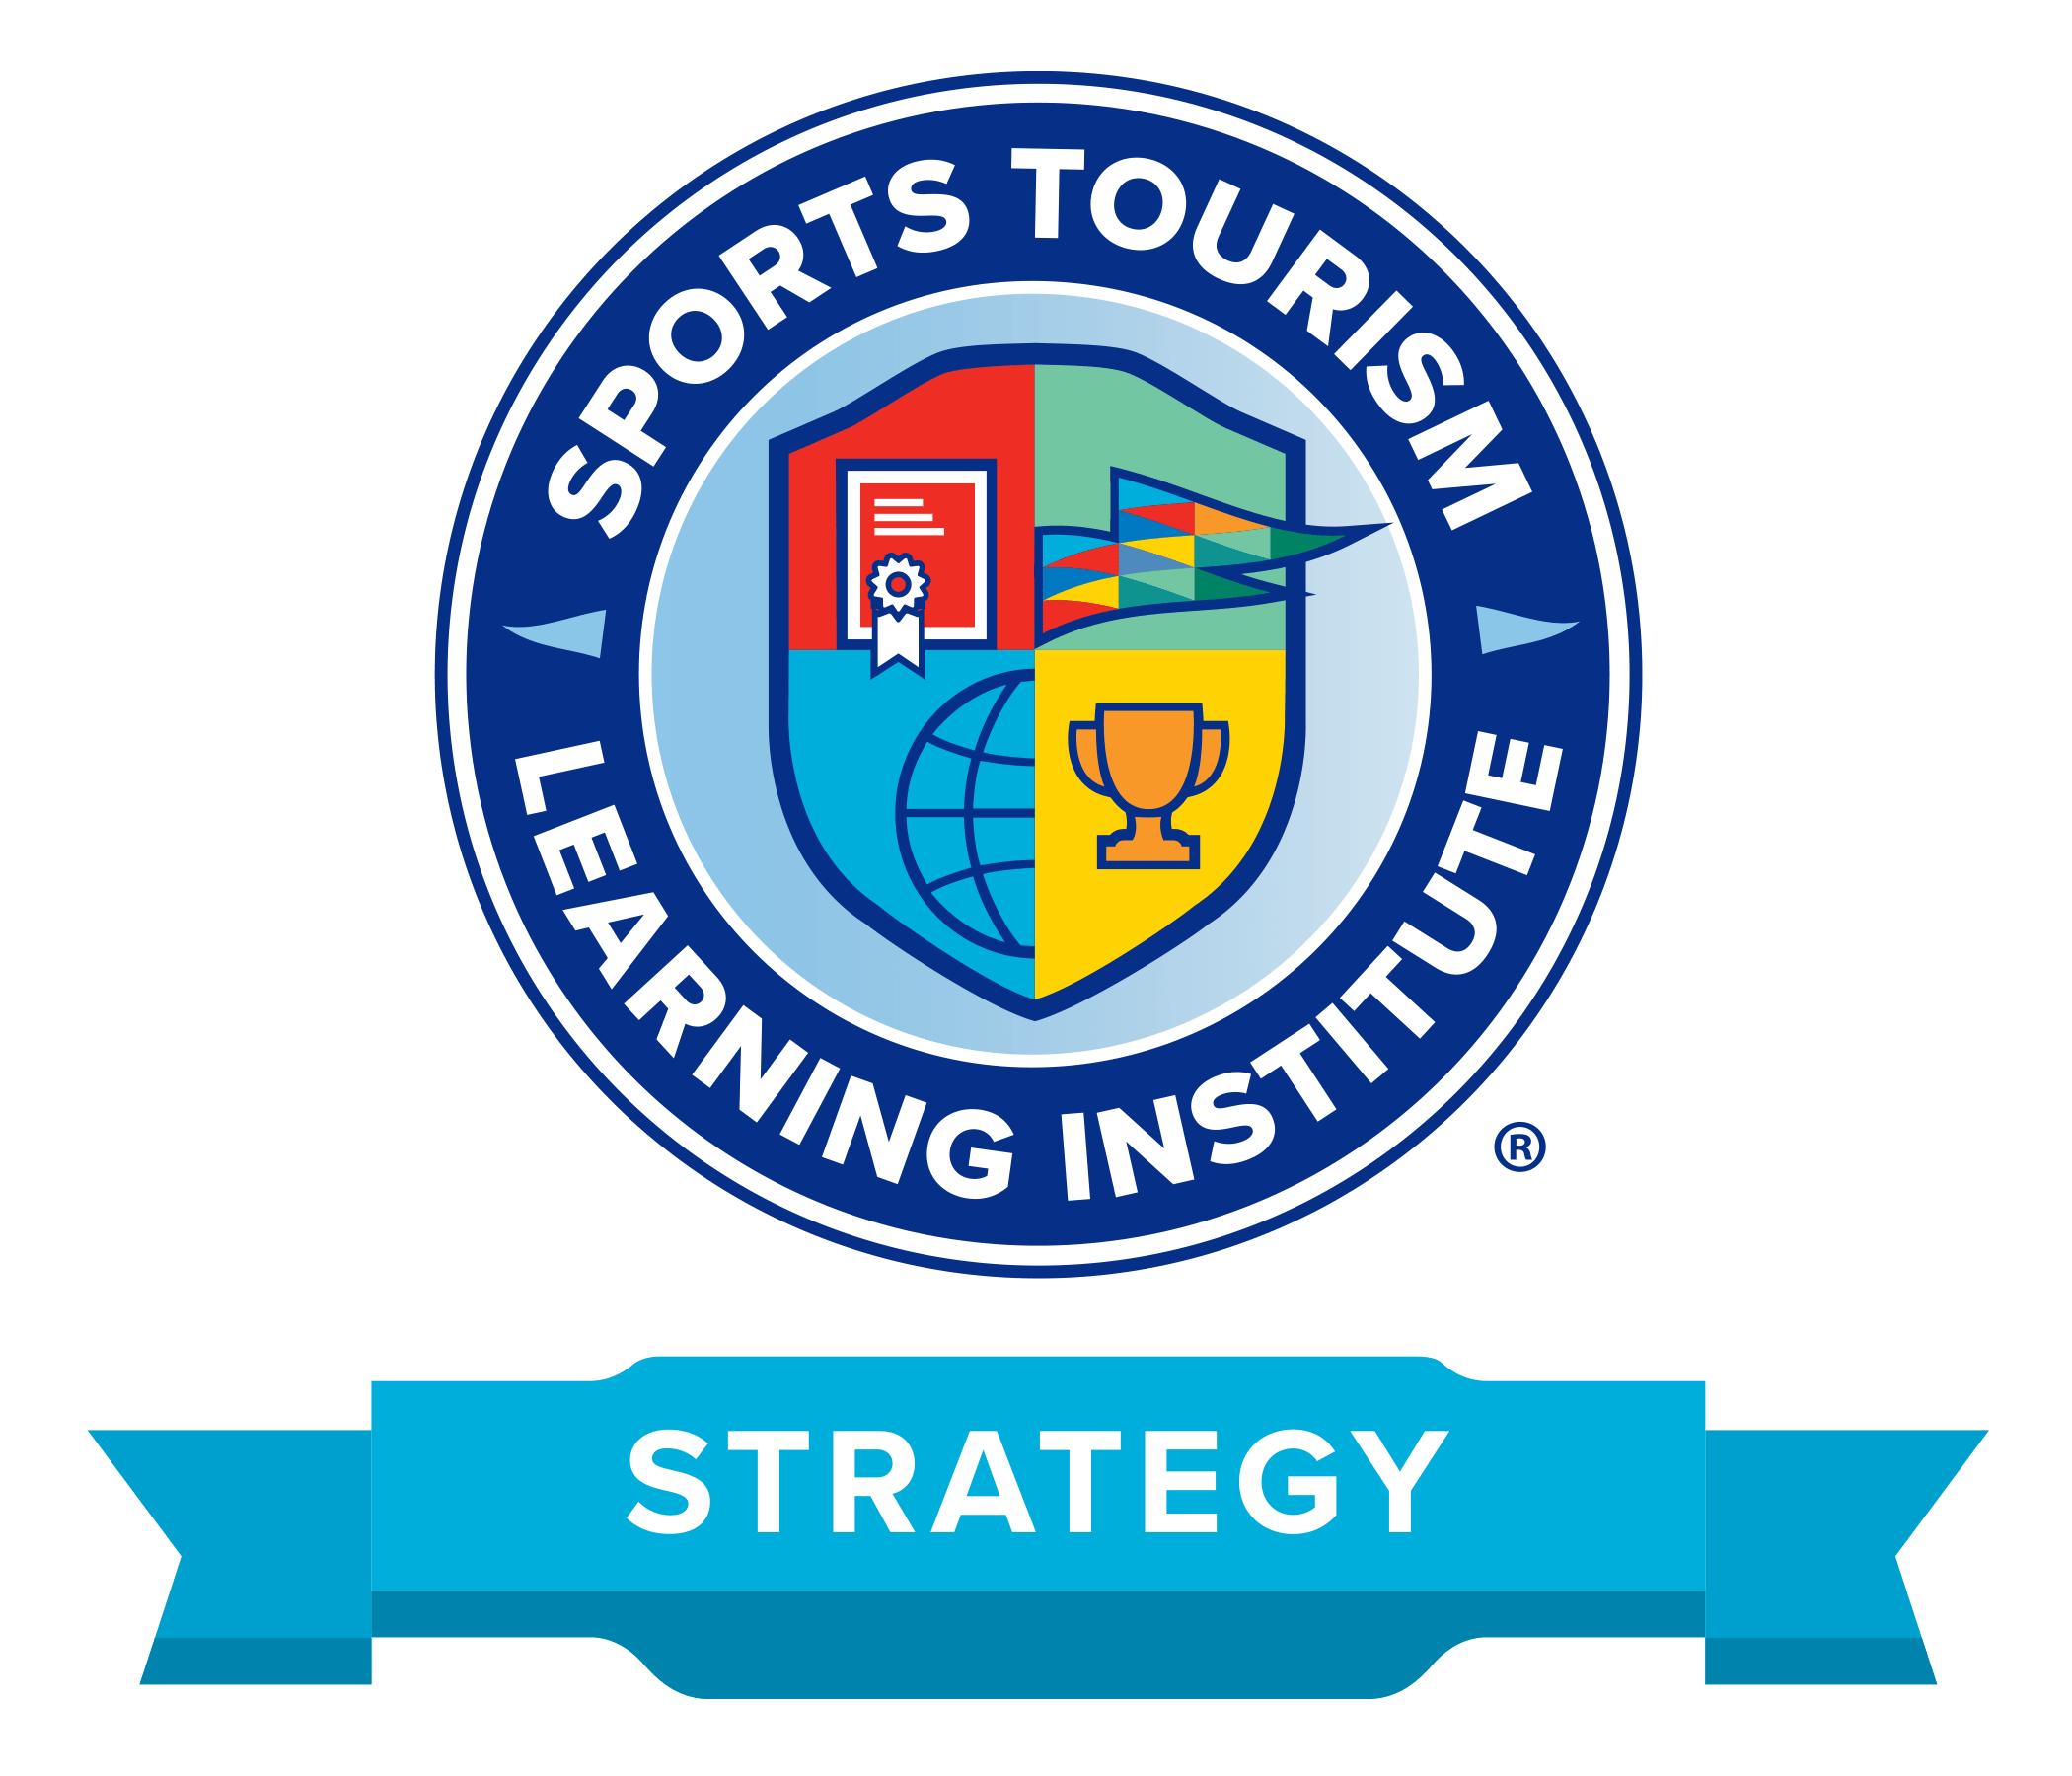 sport tourism development strategy